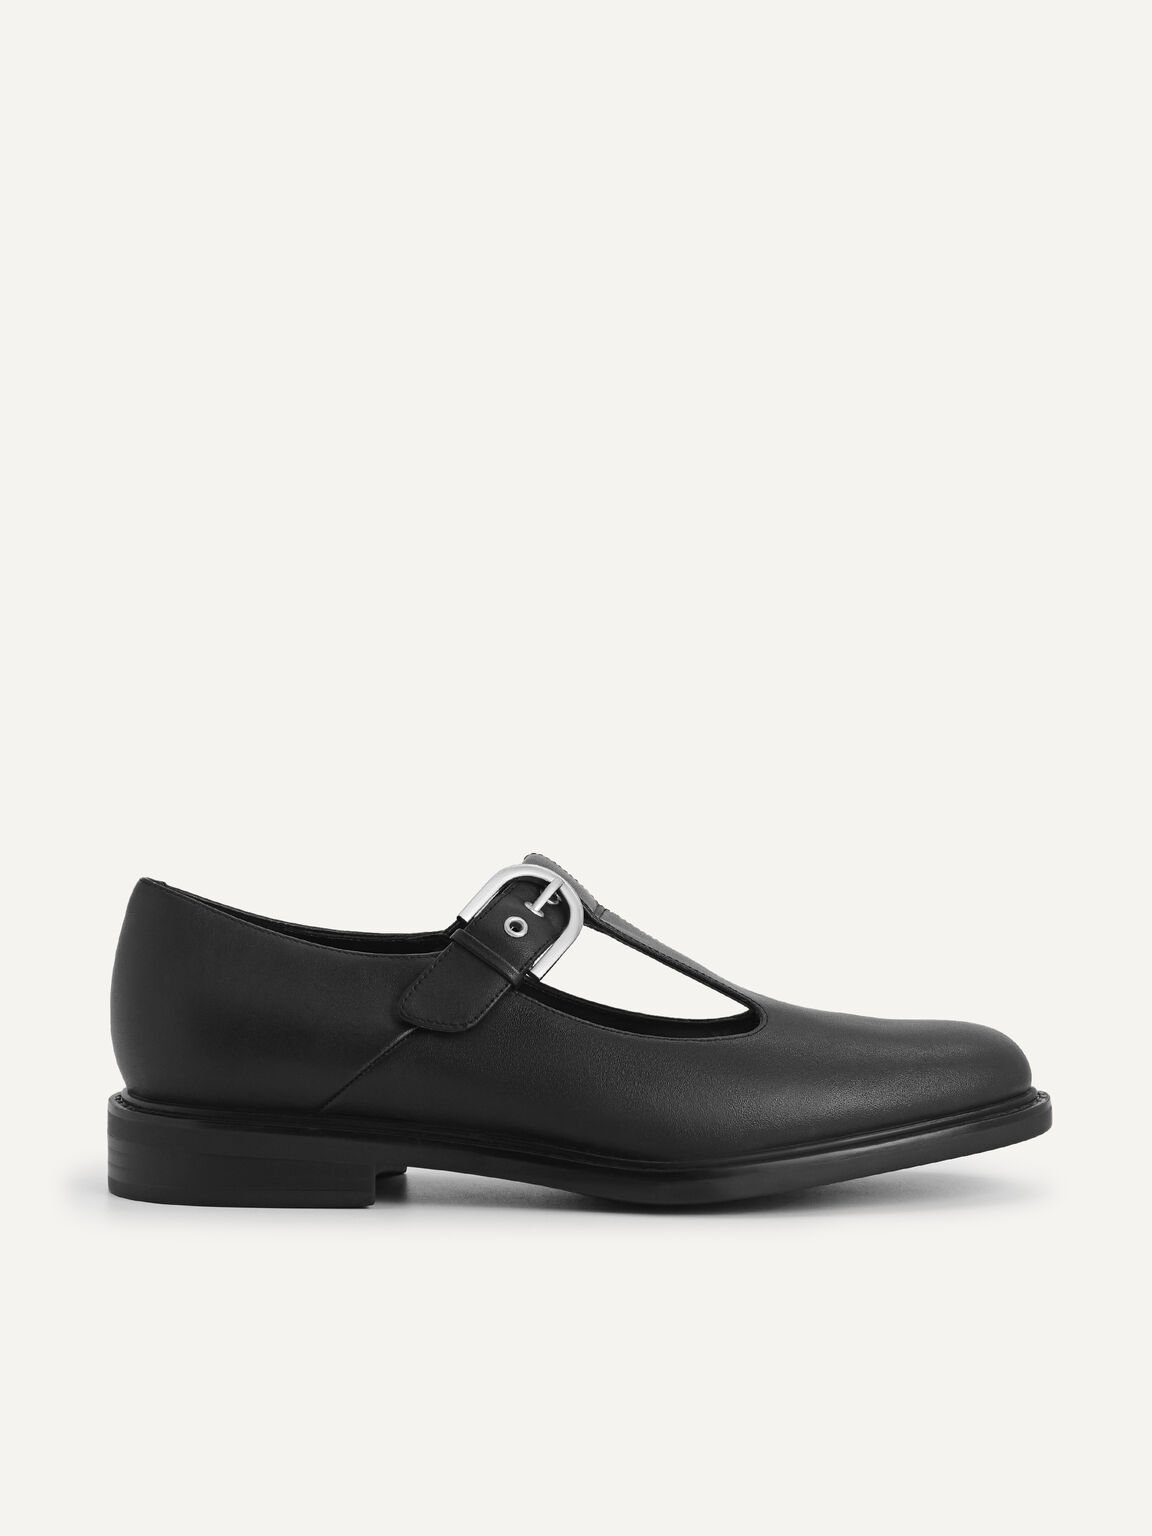 Leather Mary Jane Shoes, Black